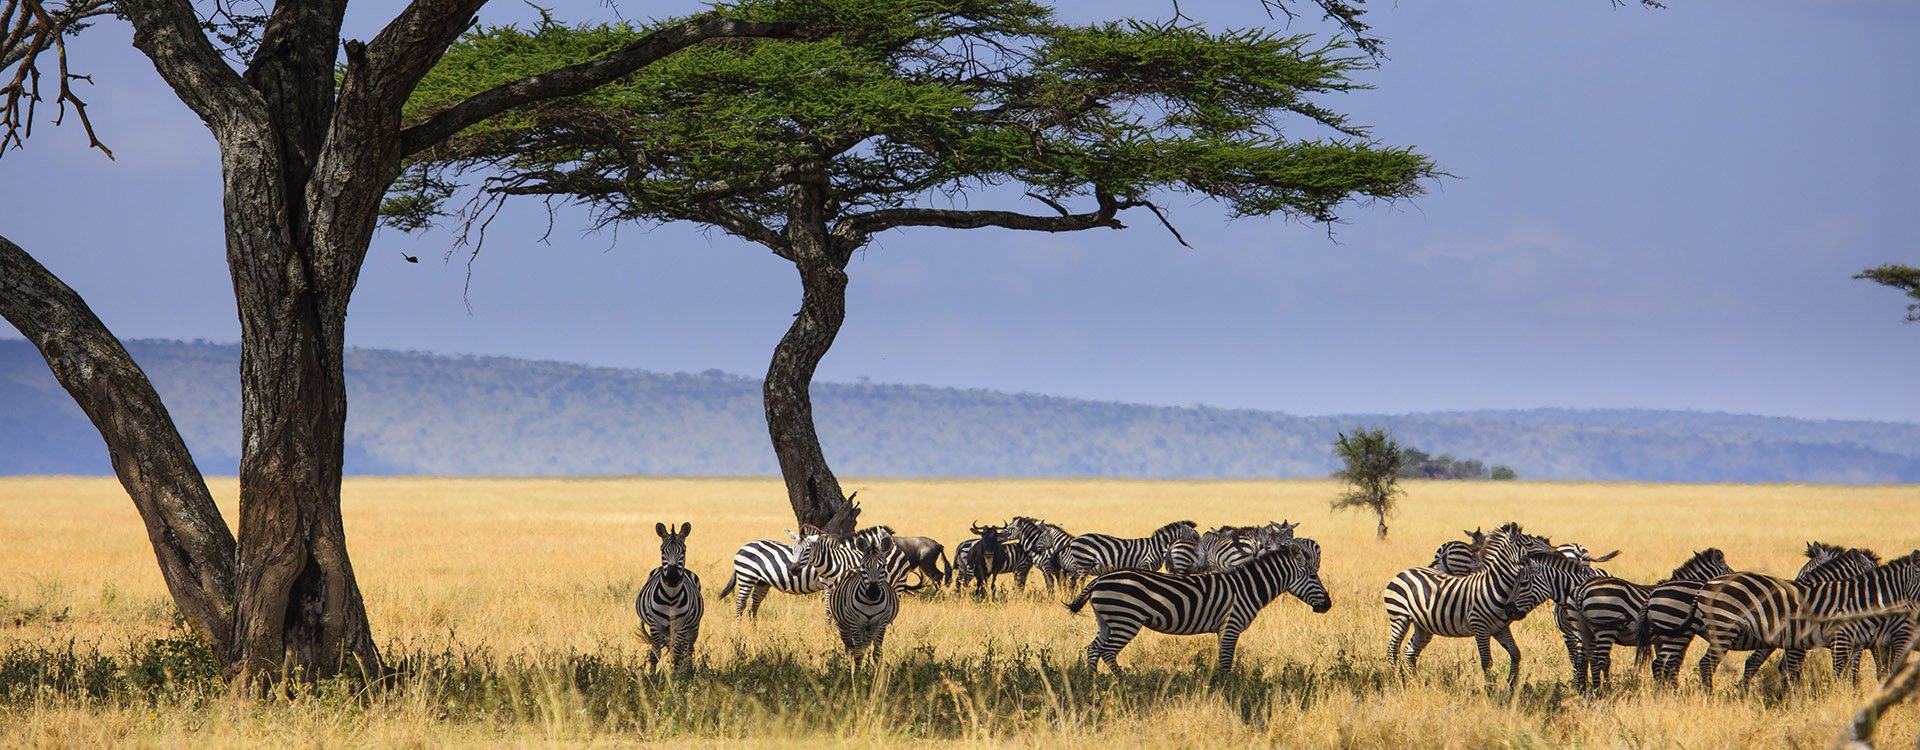 Tanzania_Serengeti National Park